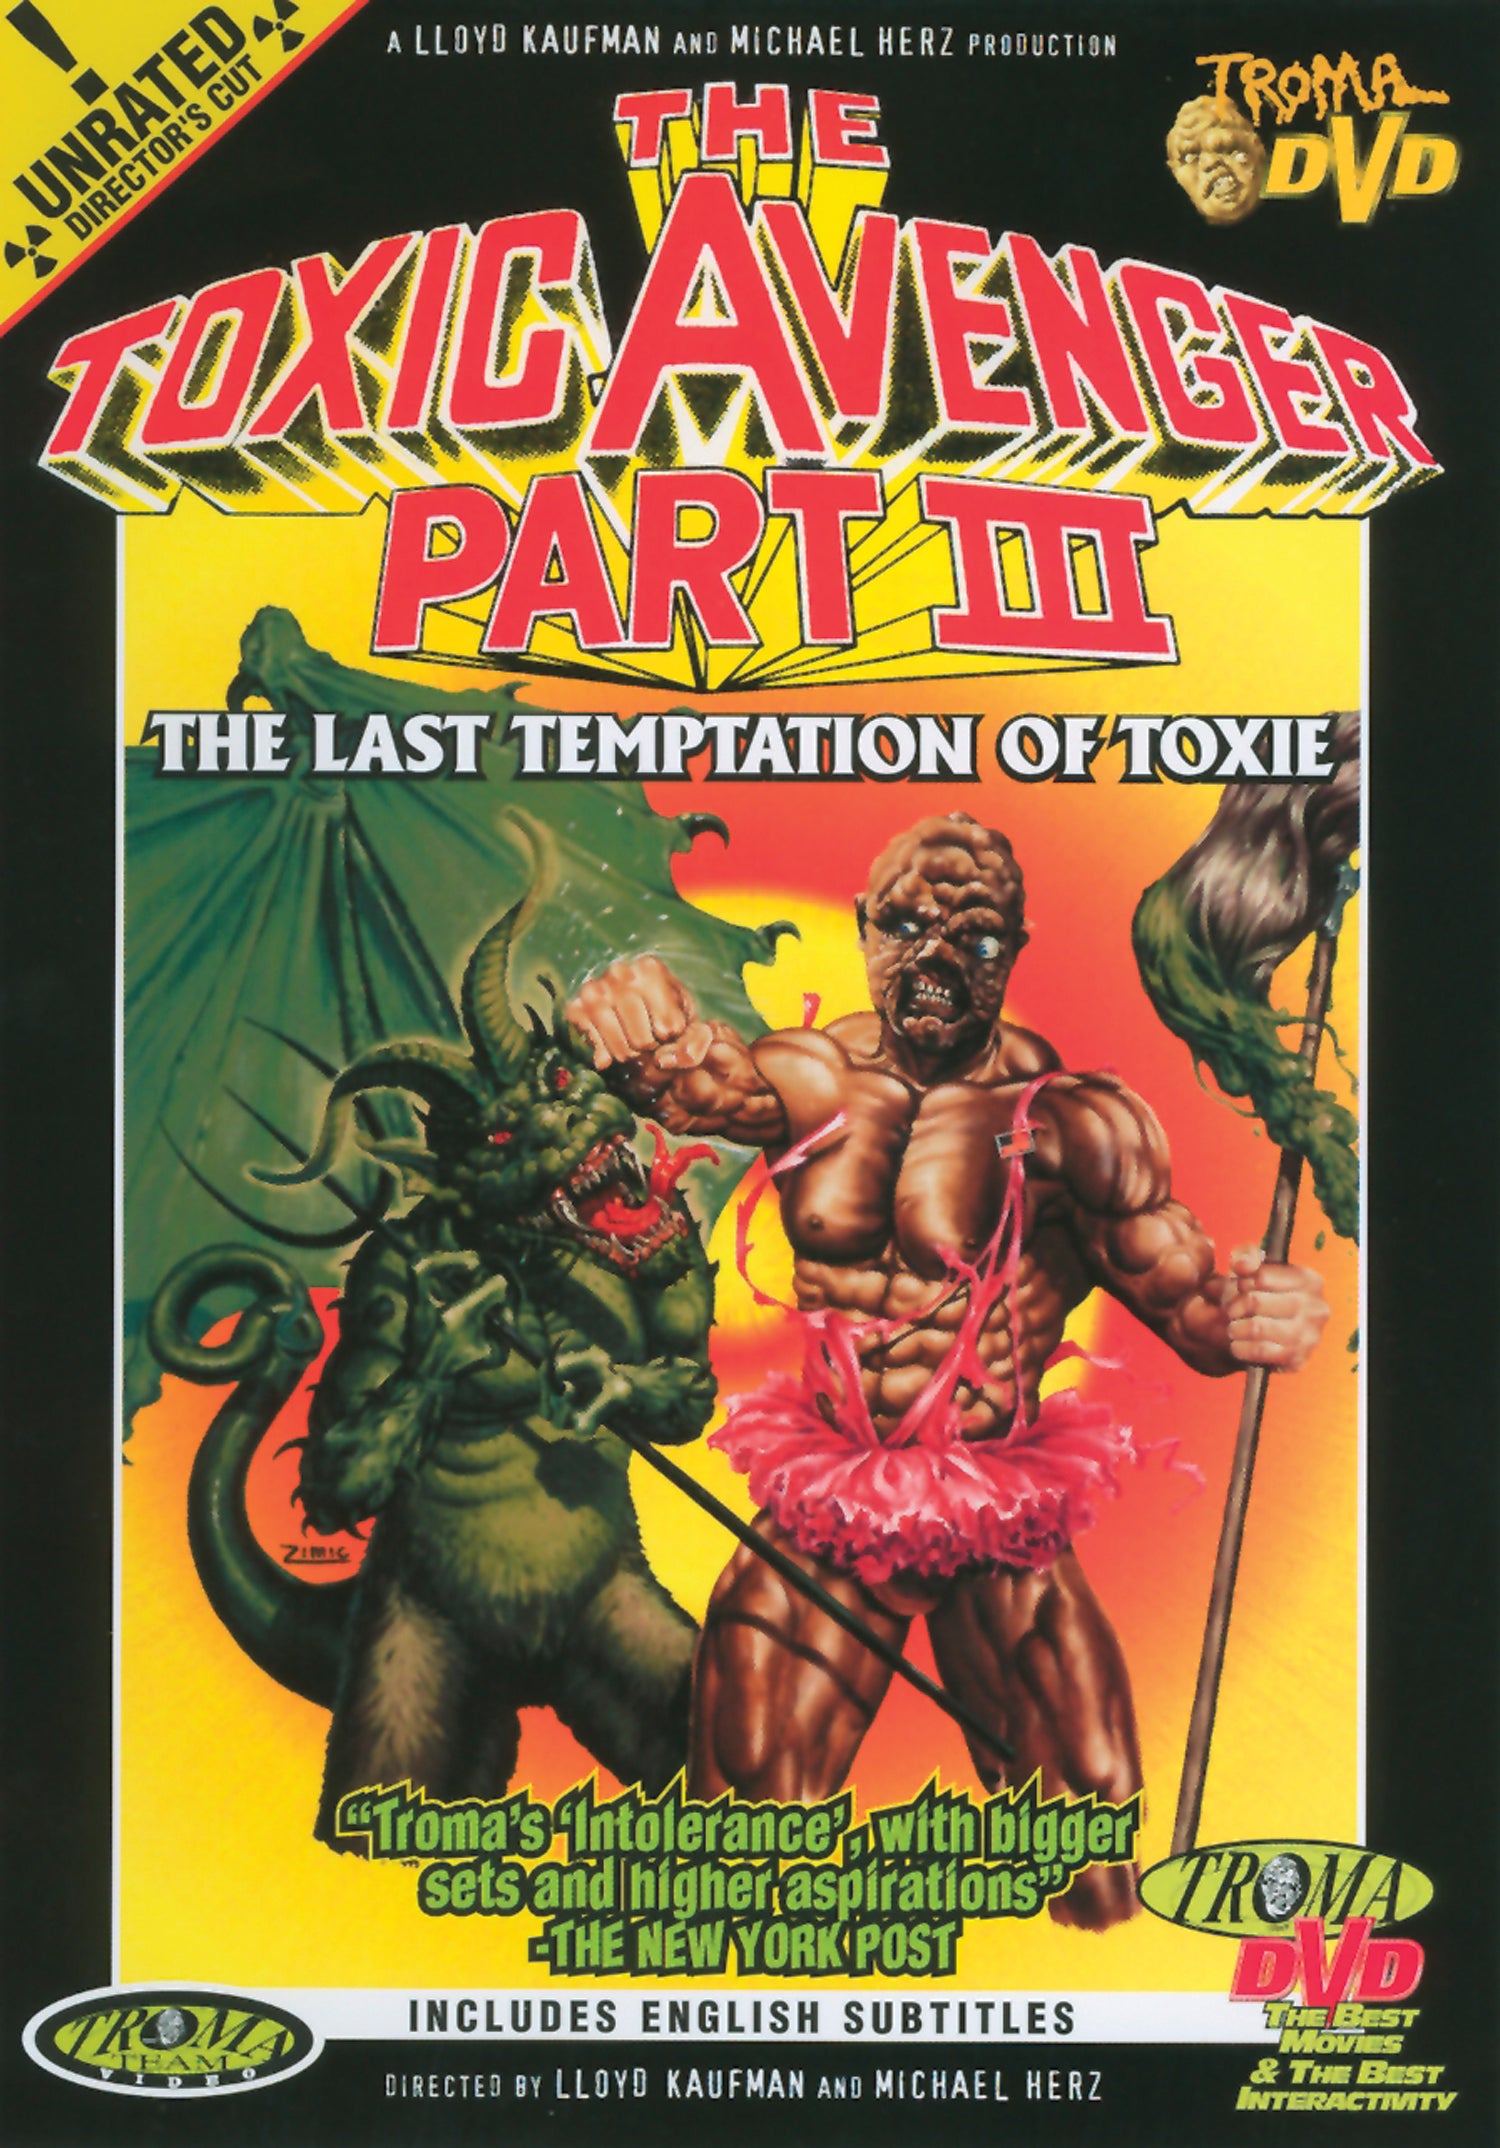 THE TOXIC AVENGER PART III: THE LAST TEMPTATION OF TOXIE DVD